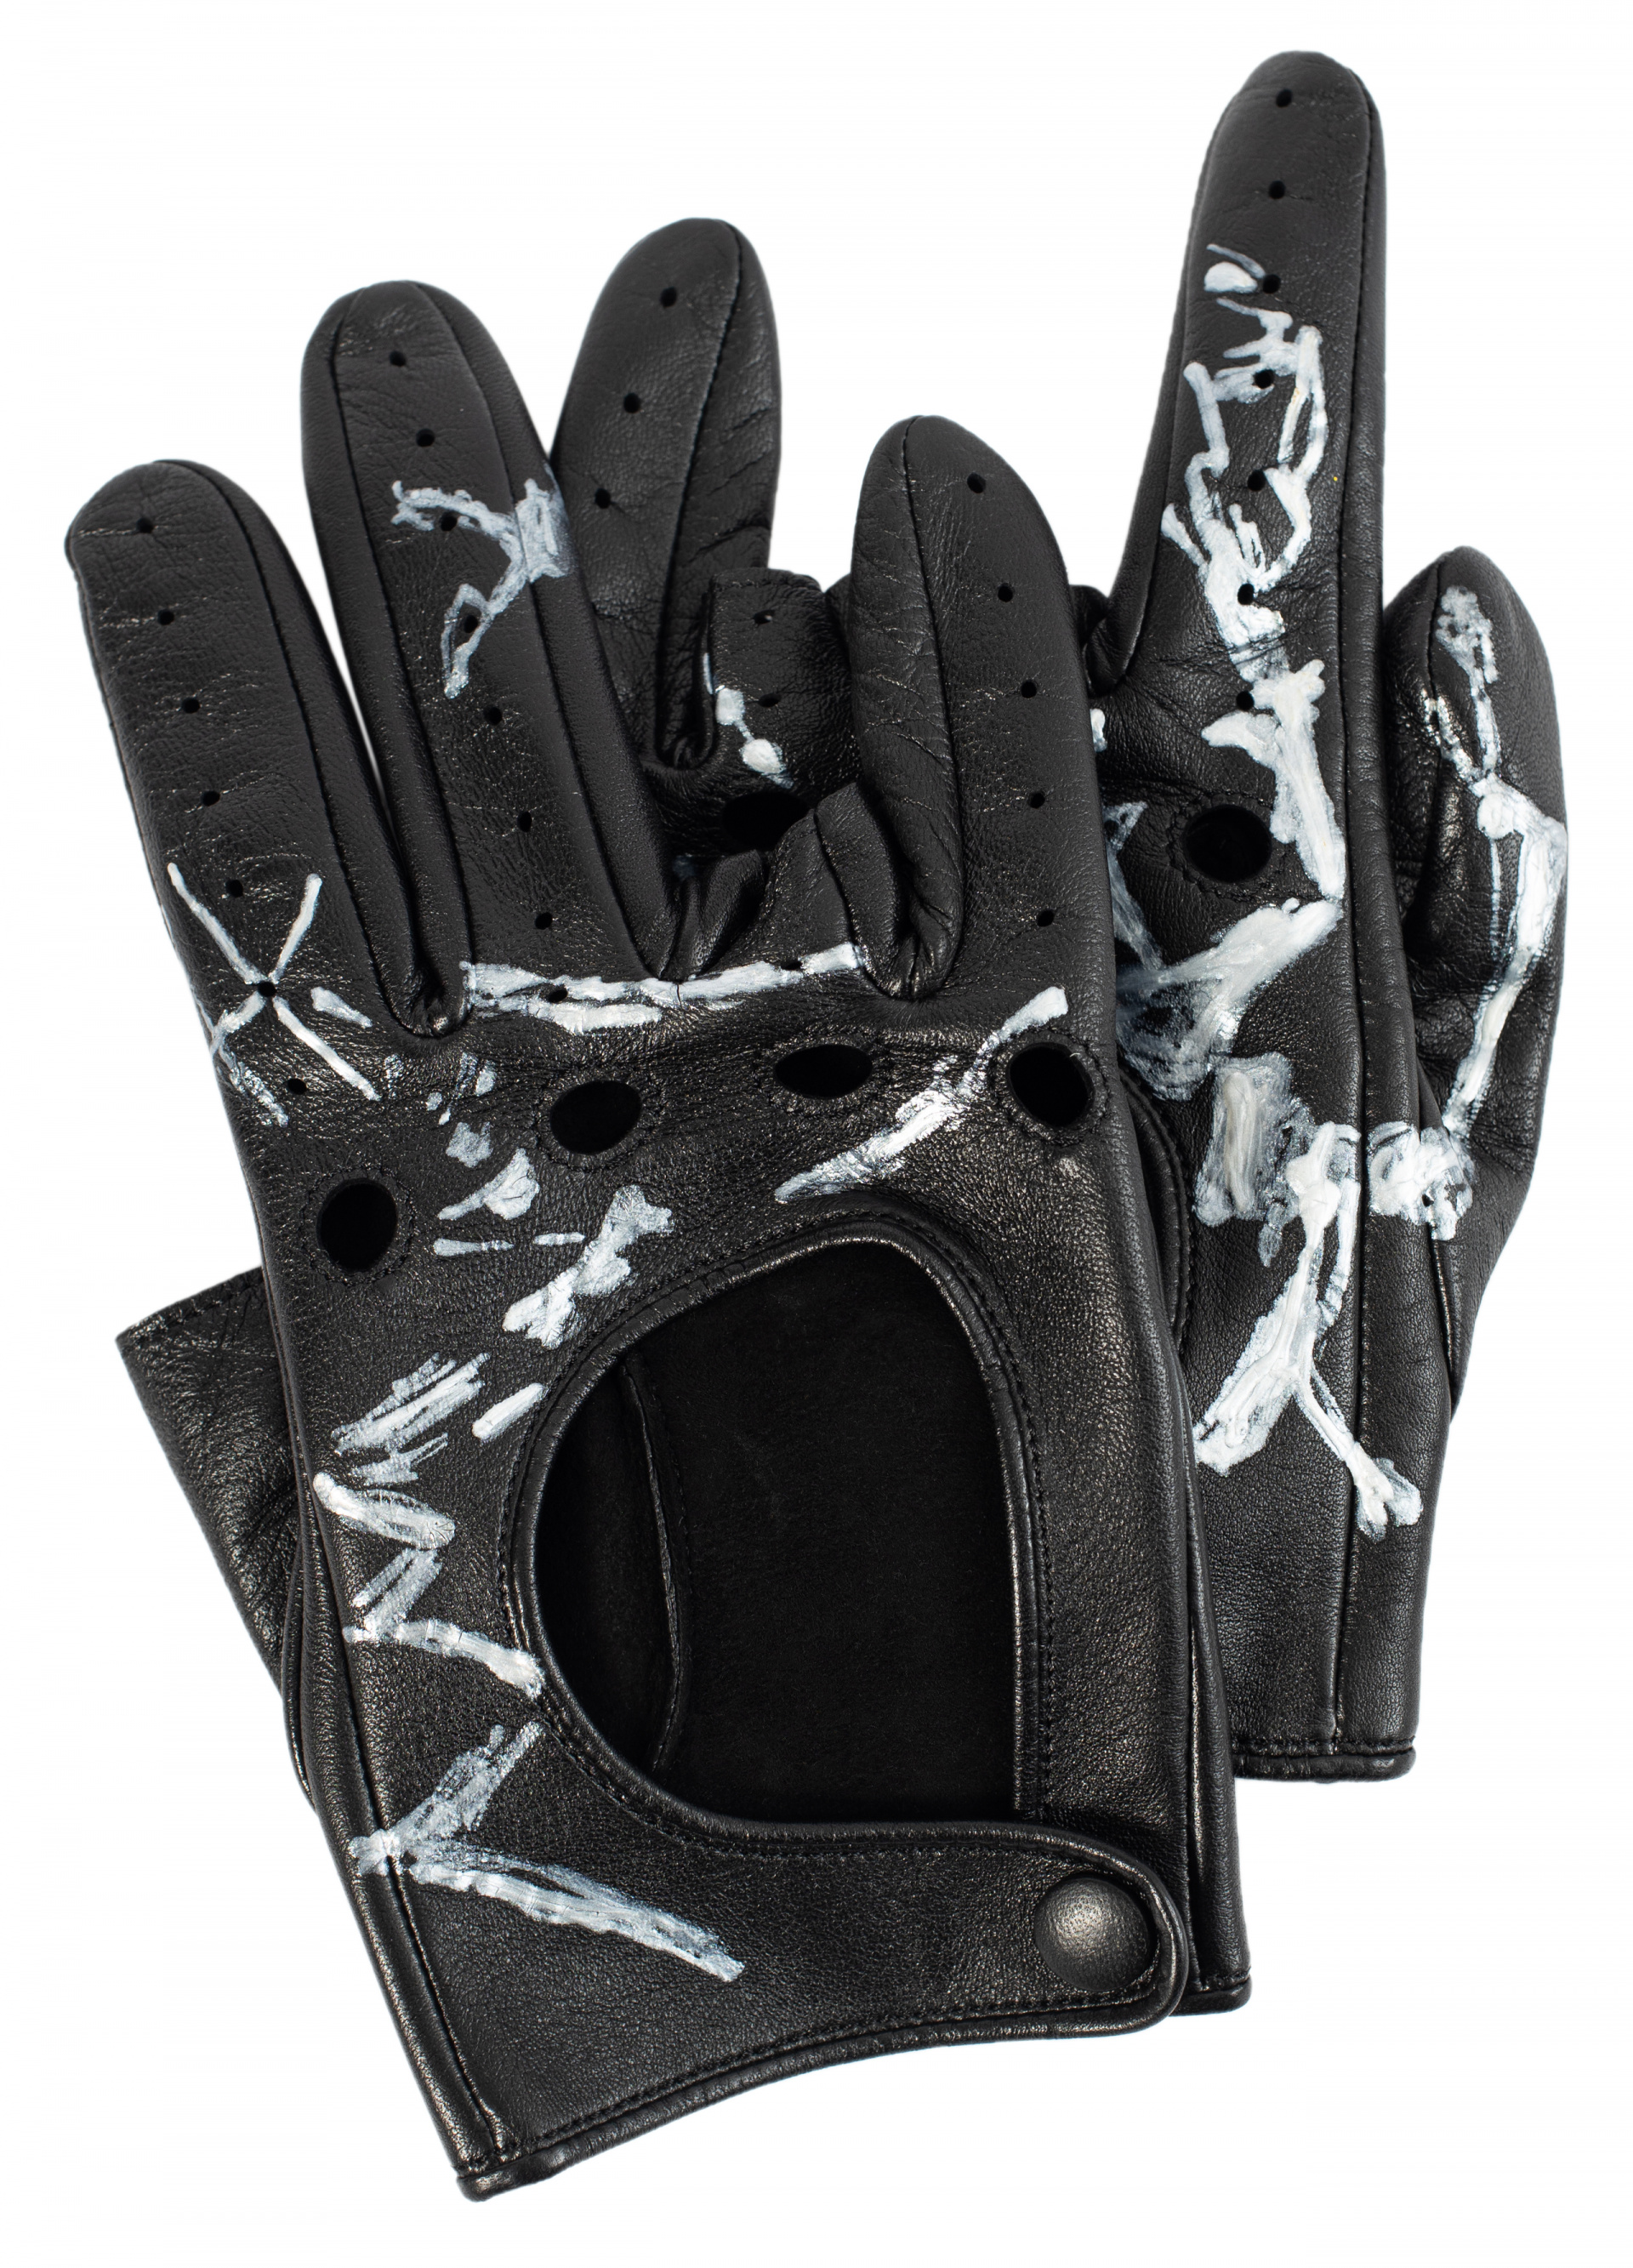 Yohji Yamamoto Black leather gloves with finger cut